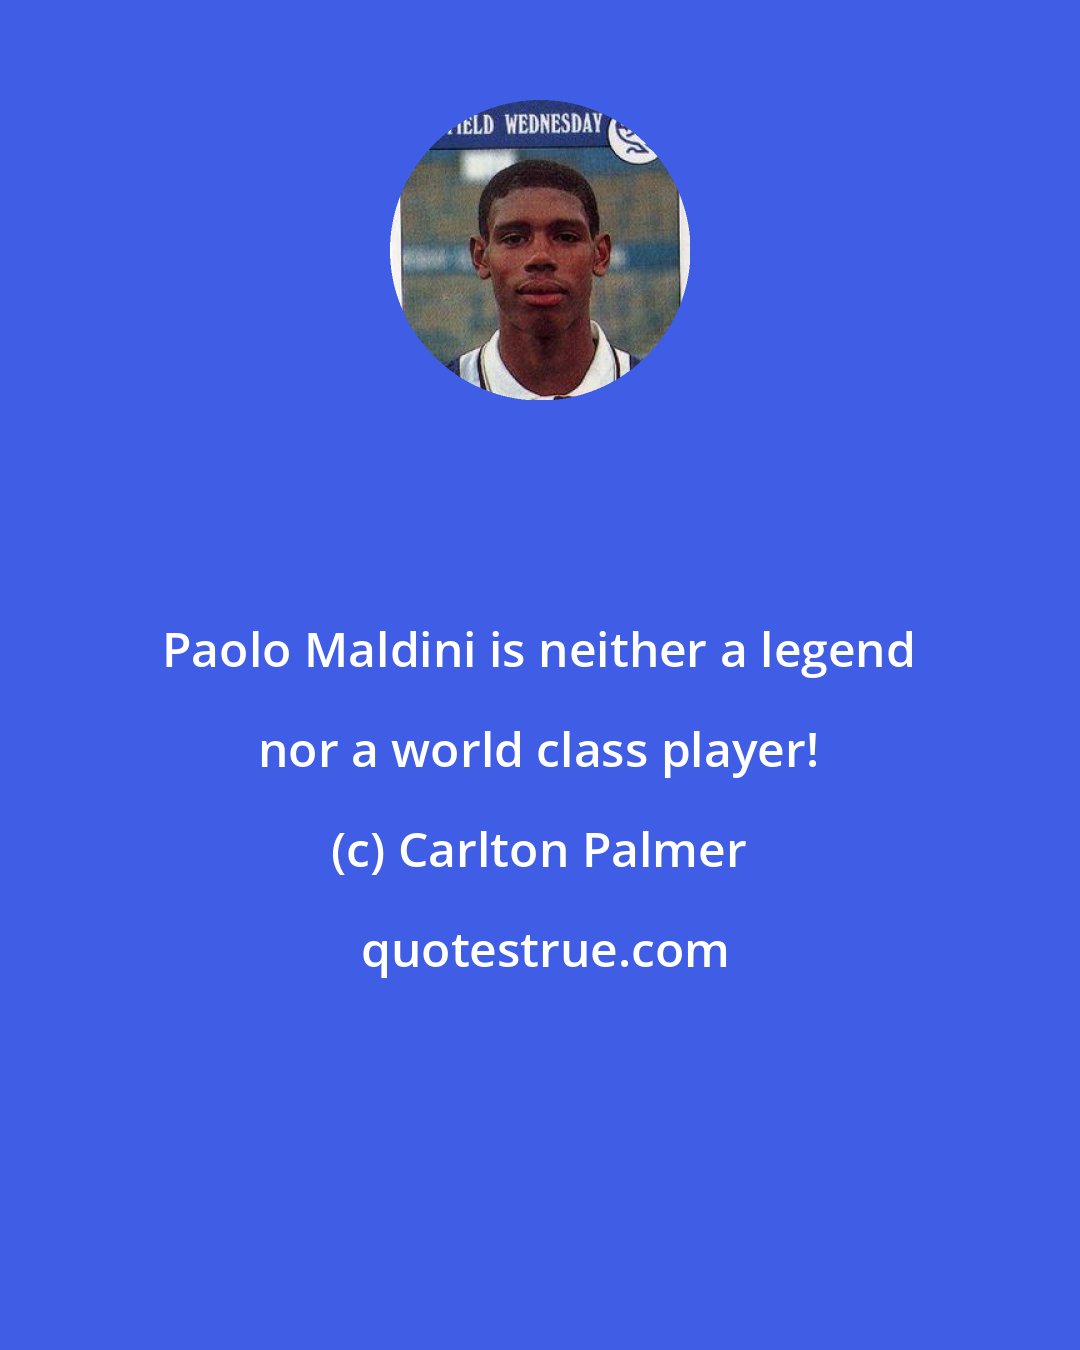 Carlton Palmer: Paolo Maldini is neither a legend nor a world class player!